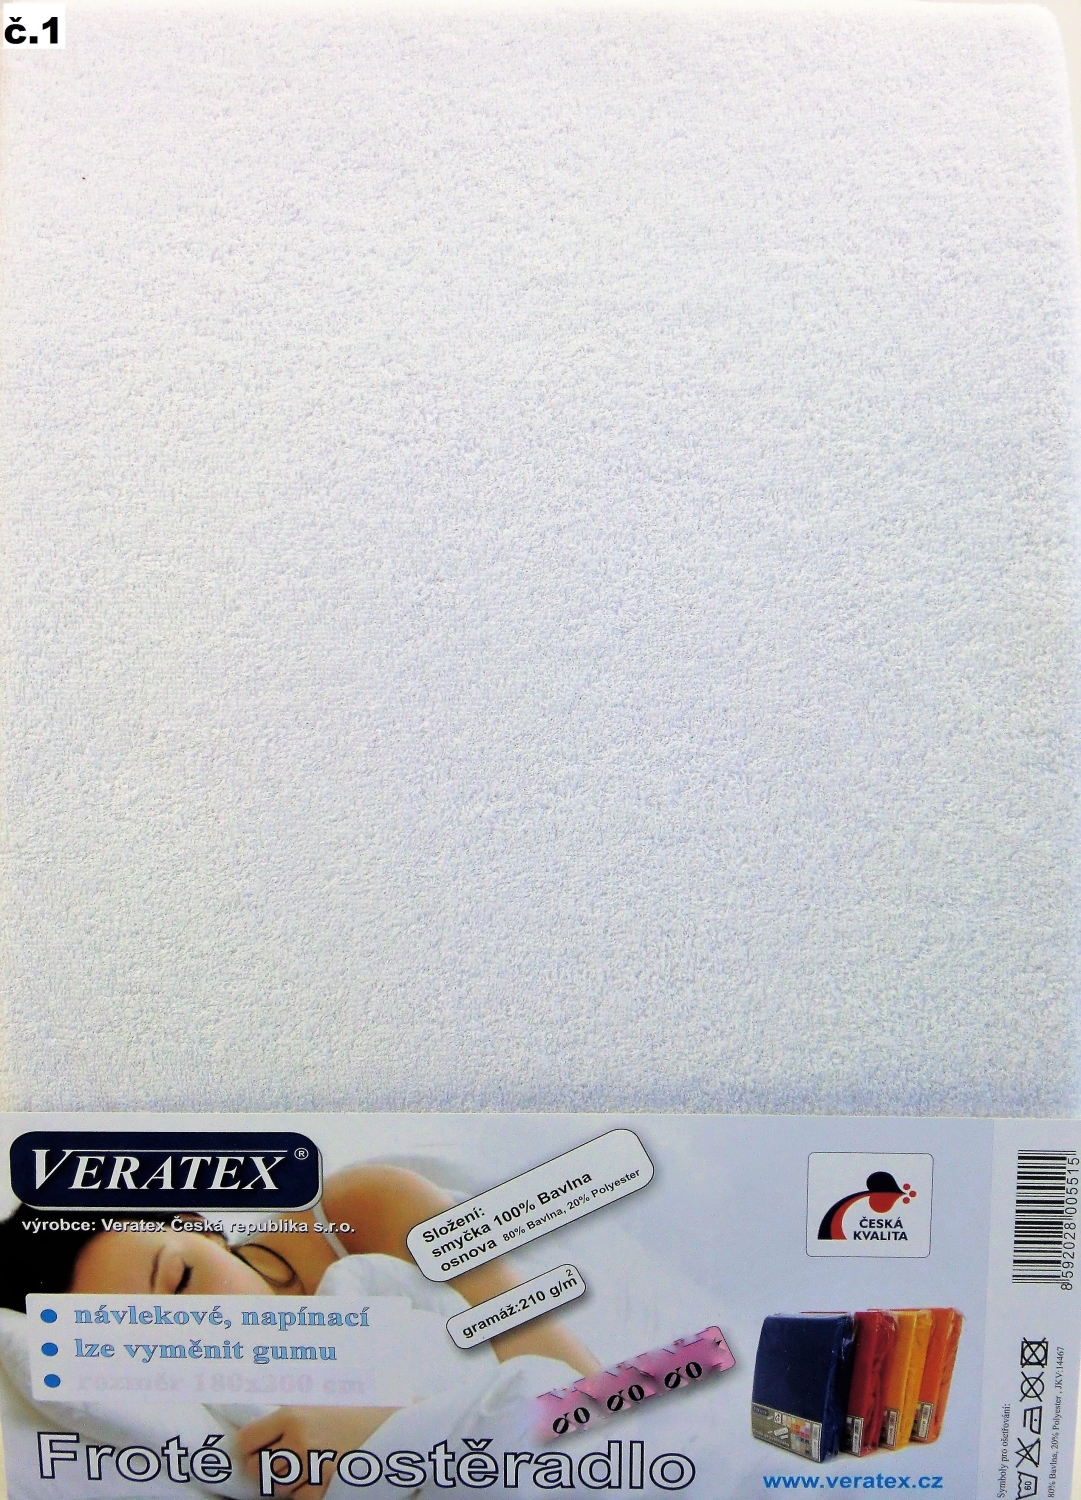 Veratex Froté prostěradlo dvoulůžko 180x200/20cm (č. 1- bílá)